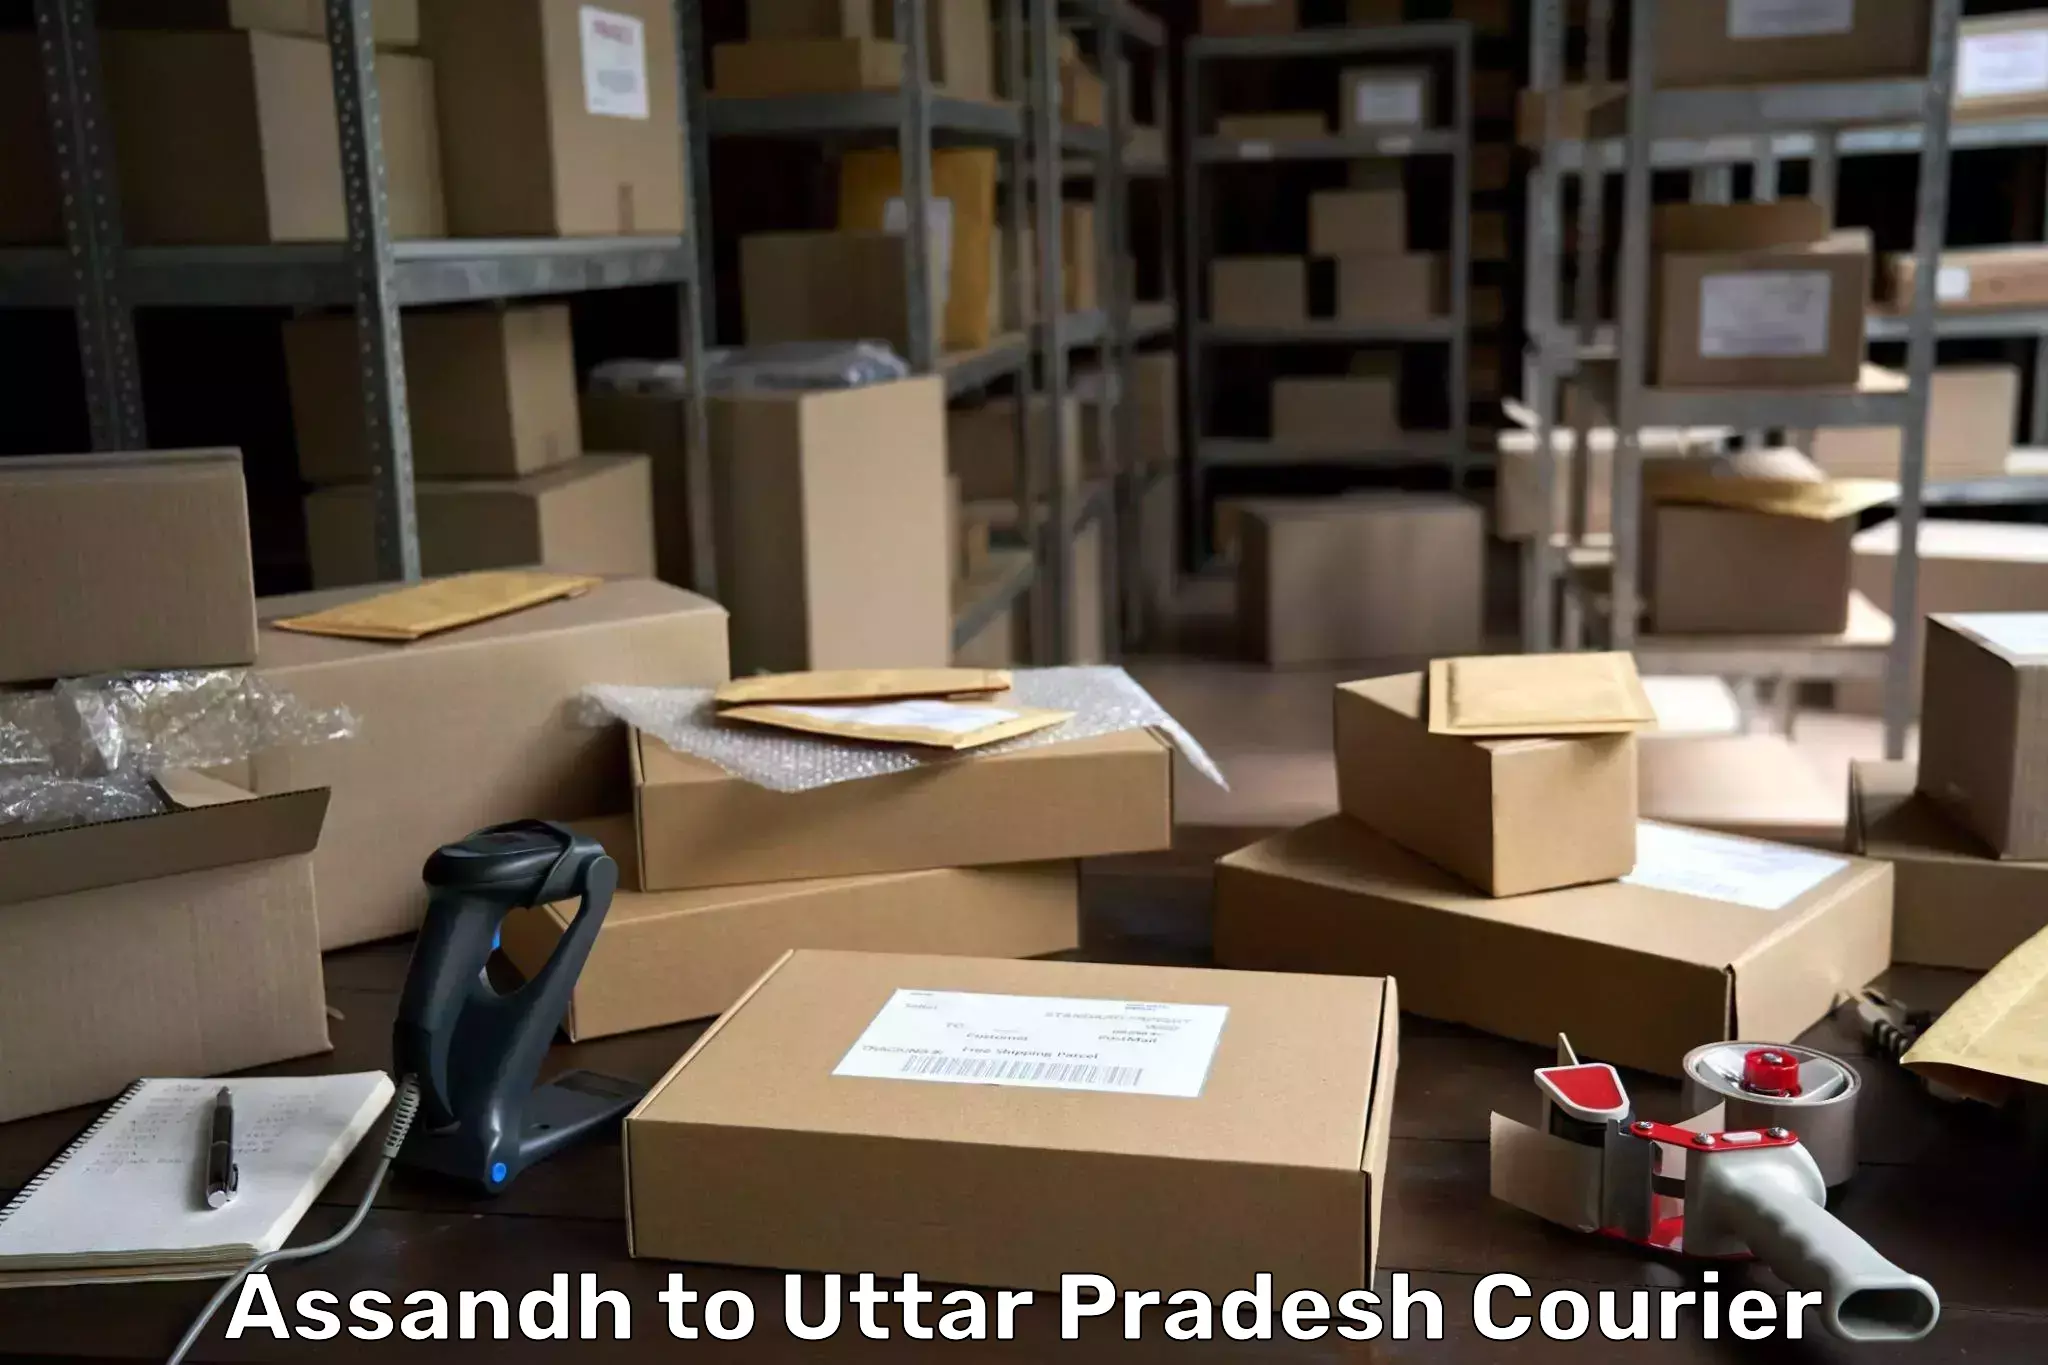 Courier service comparison Assandh to Varanasi